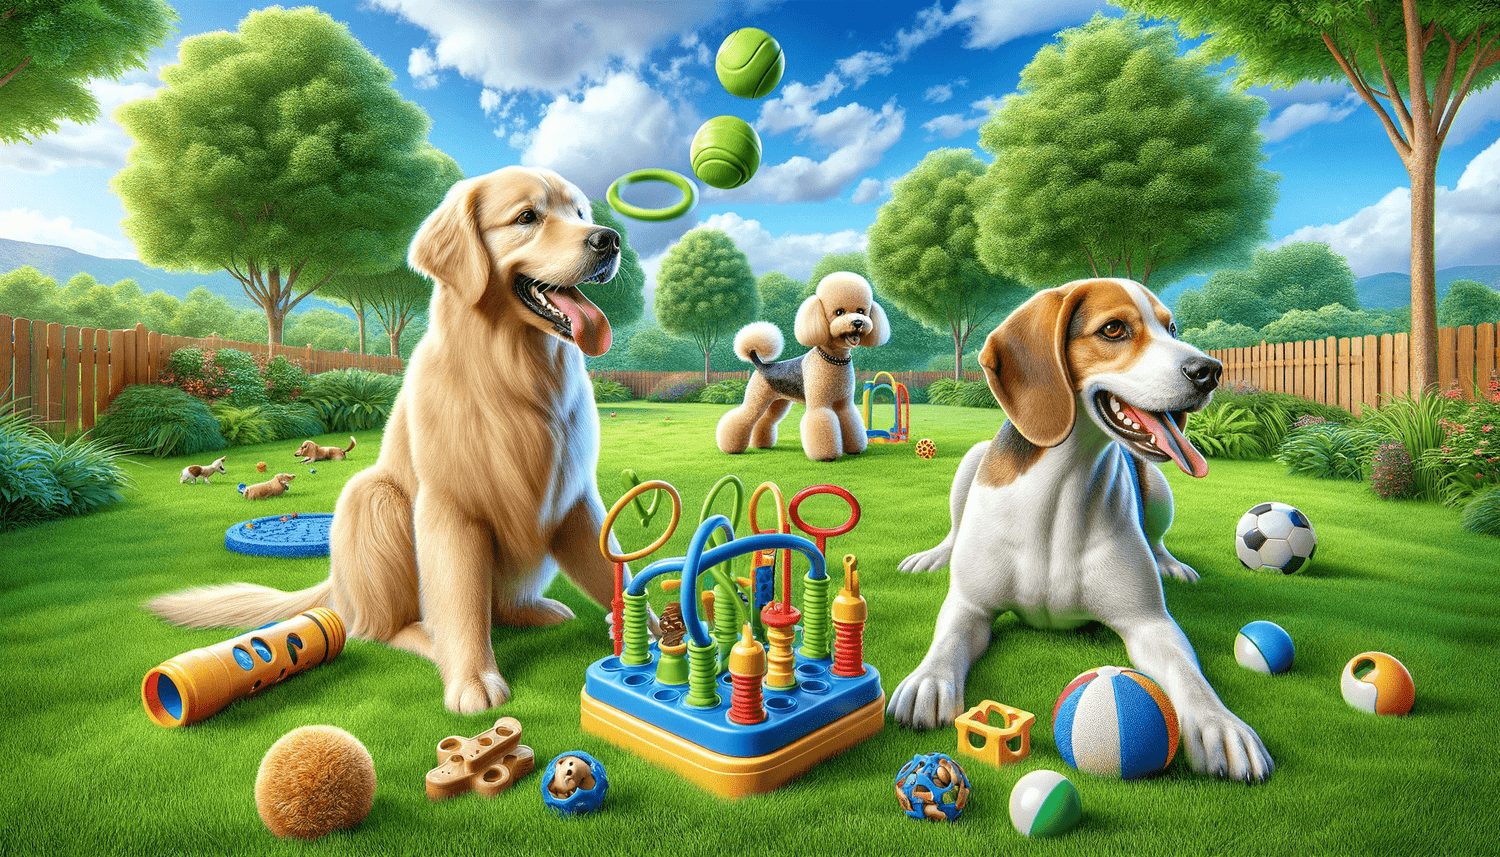 Interactief Speelgoed Hond: Stimuleer Je Hond's Geest & Lichaam